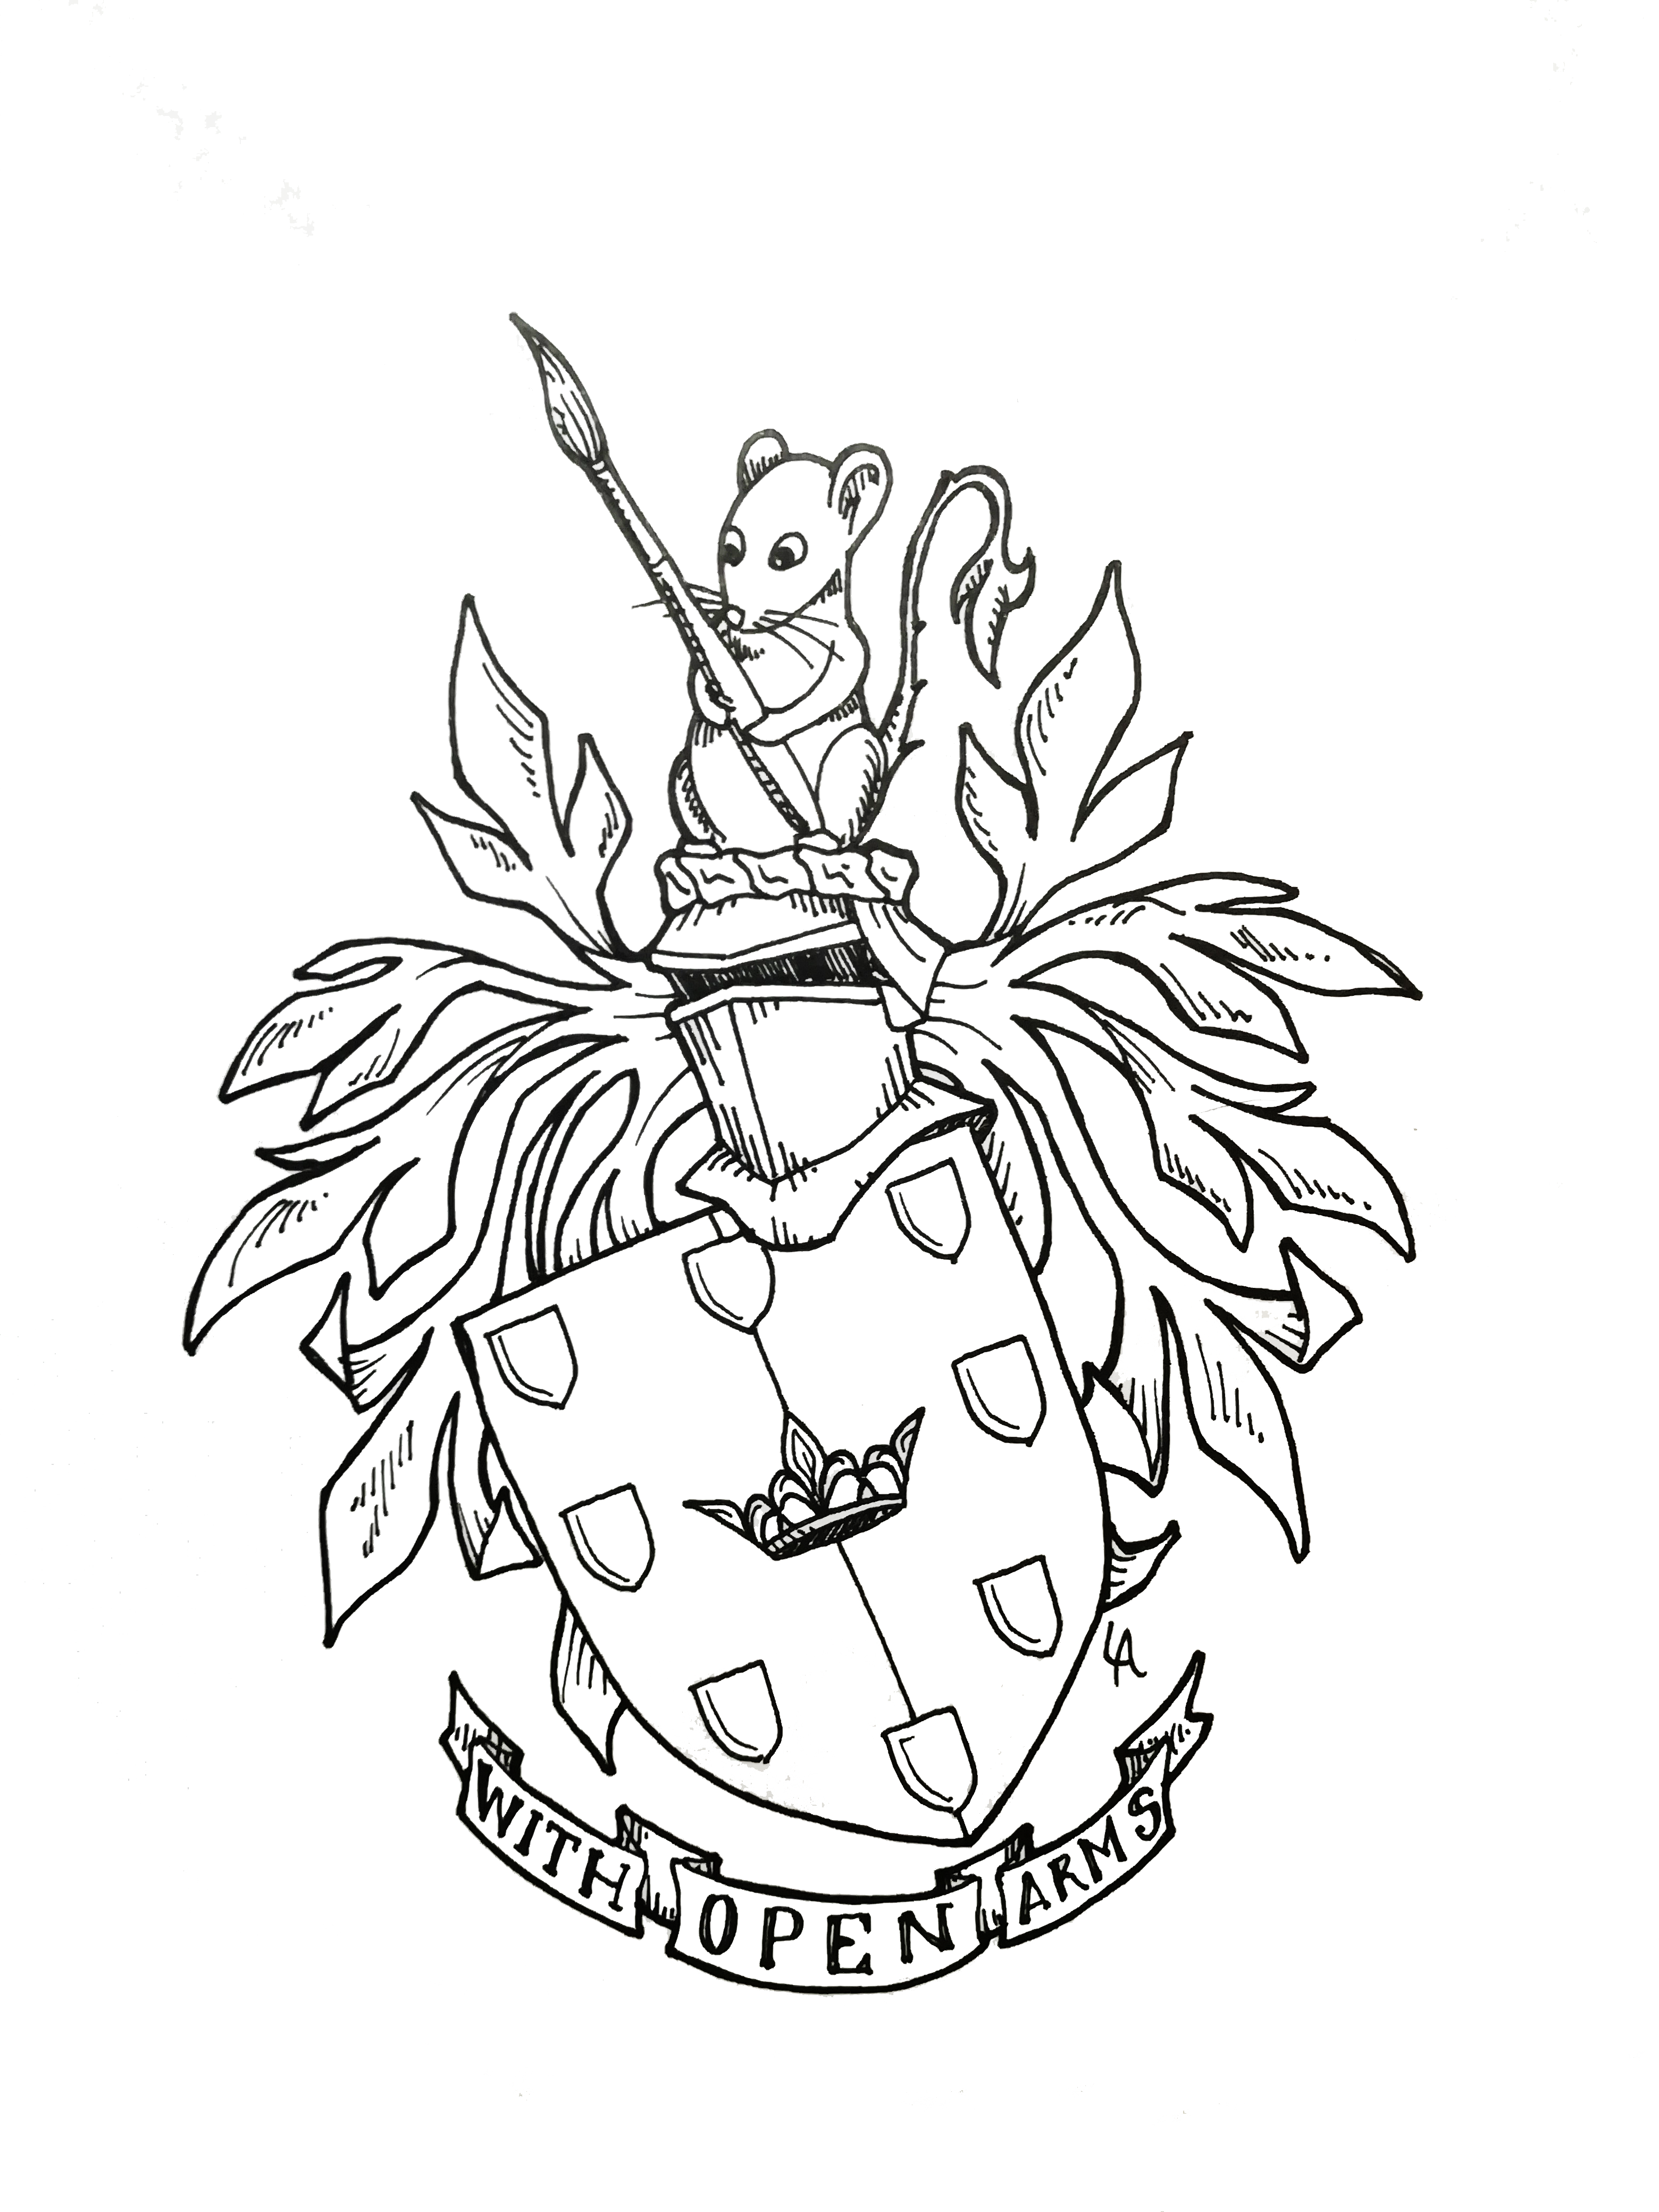 Coat of Arms of International Association of Amateur Heralds